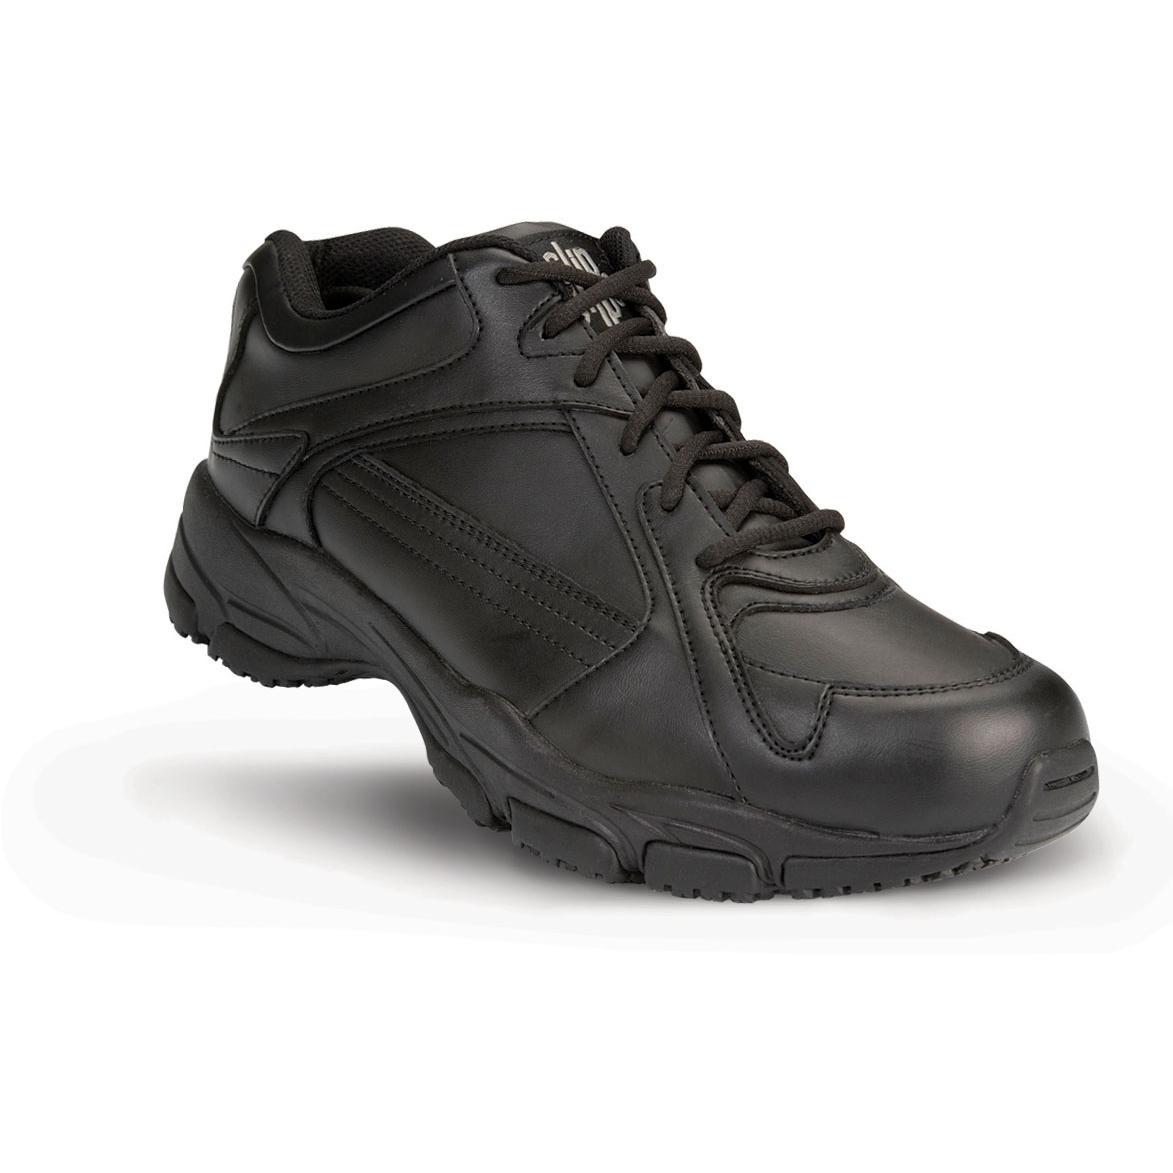 SlipGrips Slip Resistant Athletic Work Shoes , #7324R